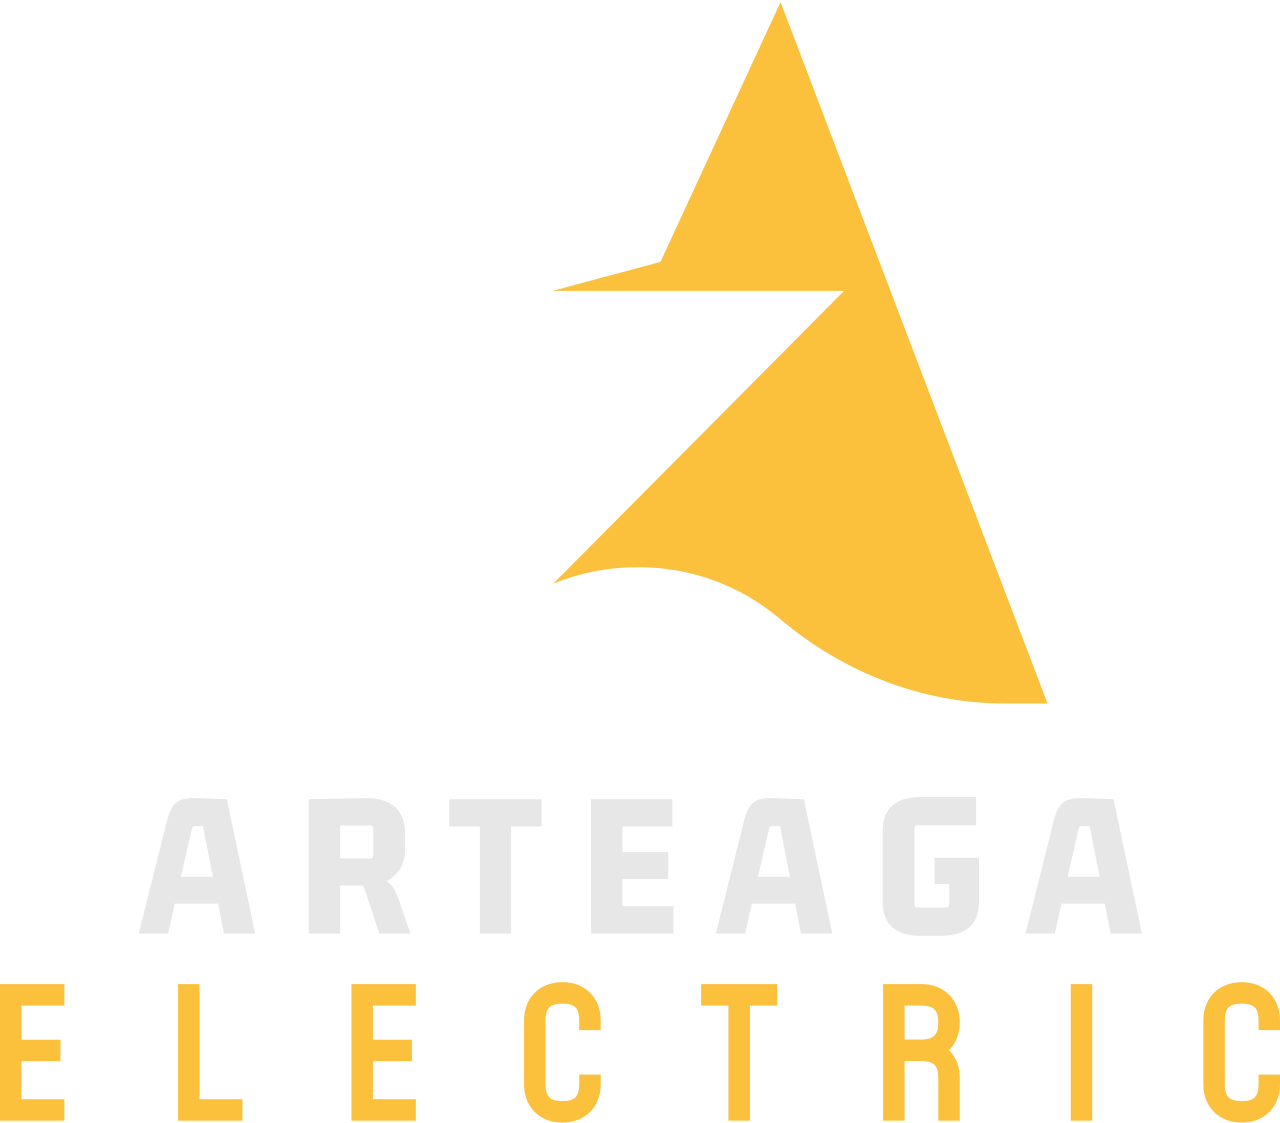 Arteaga's web page